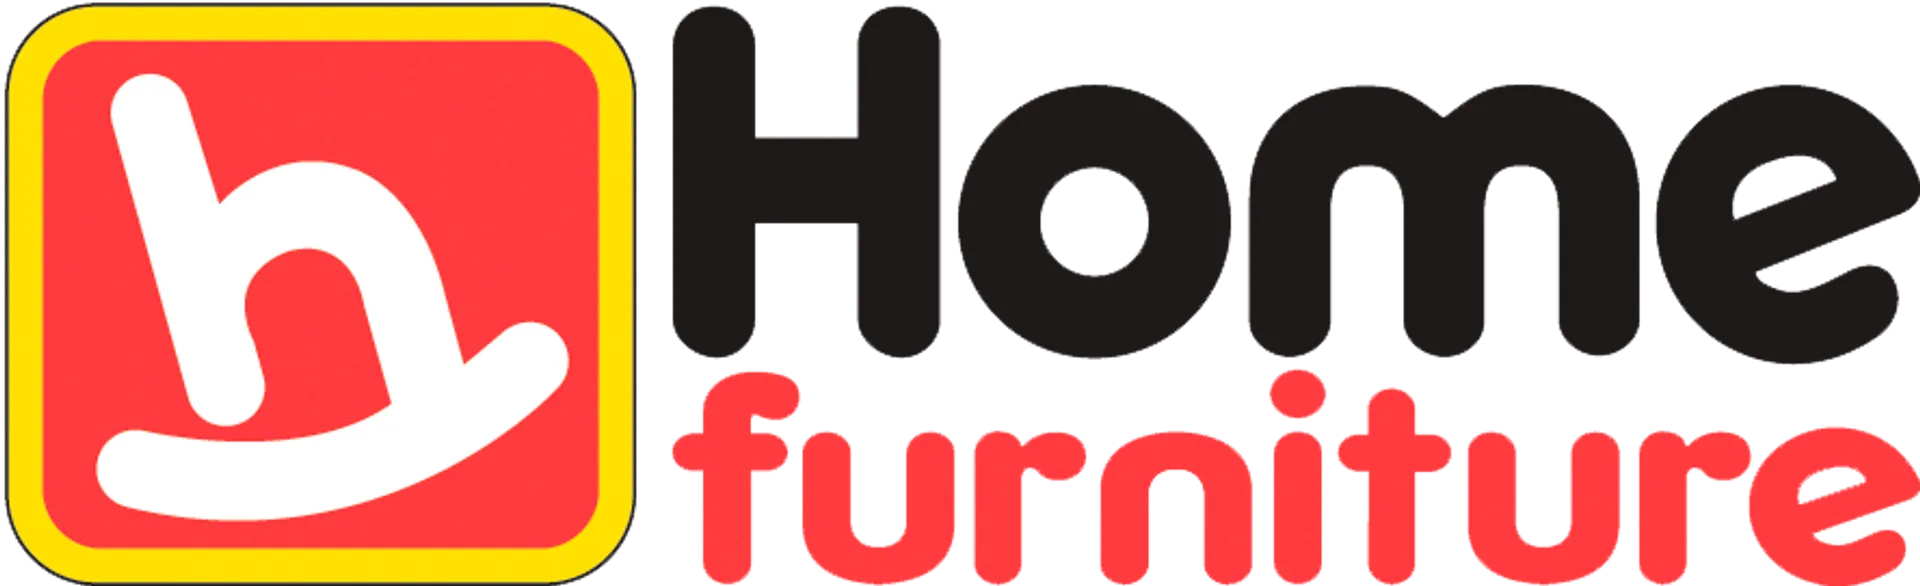 HOME FURNITURE logo of current flyer